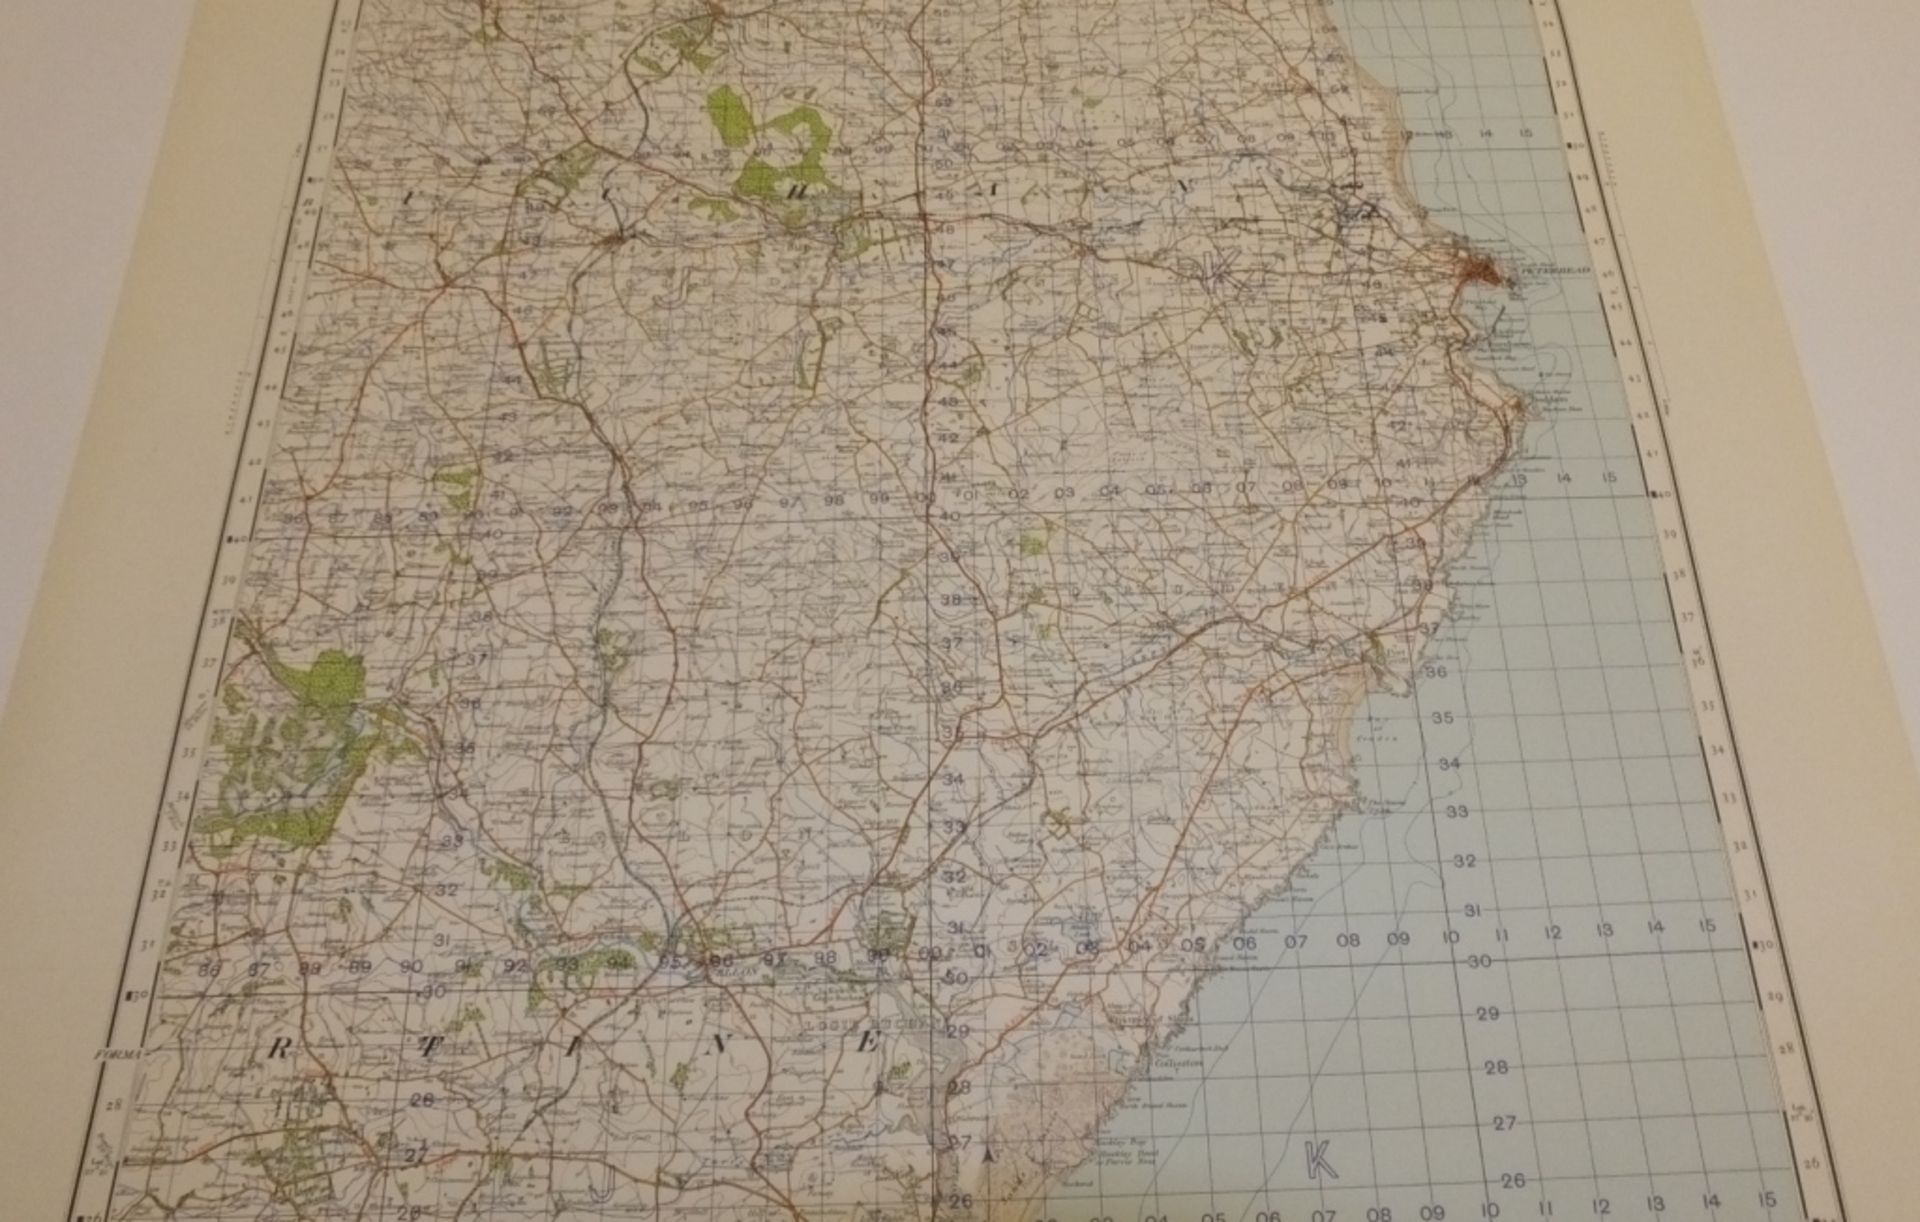 29x SCOTLAND MAP PETERHEAD 1INCH 1MILE 1949 POPULAR EDITION 4639GSGS SHEET 31 - Image 3 of 4